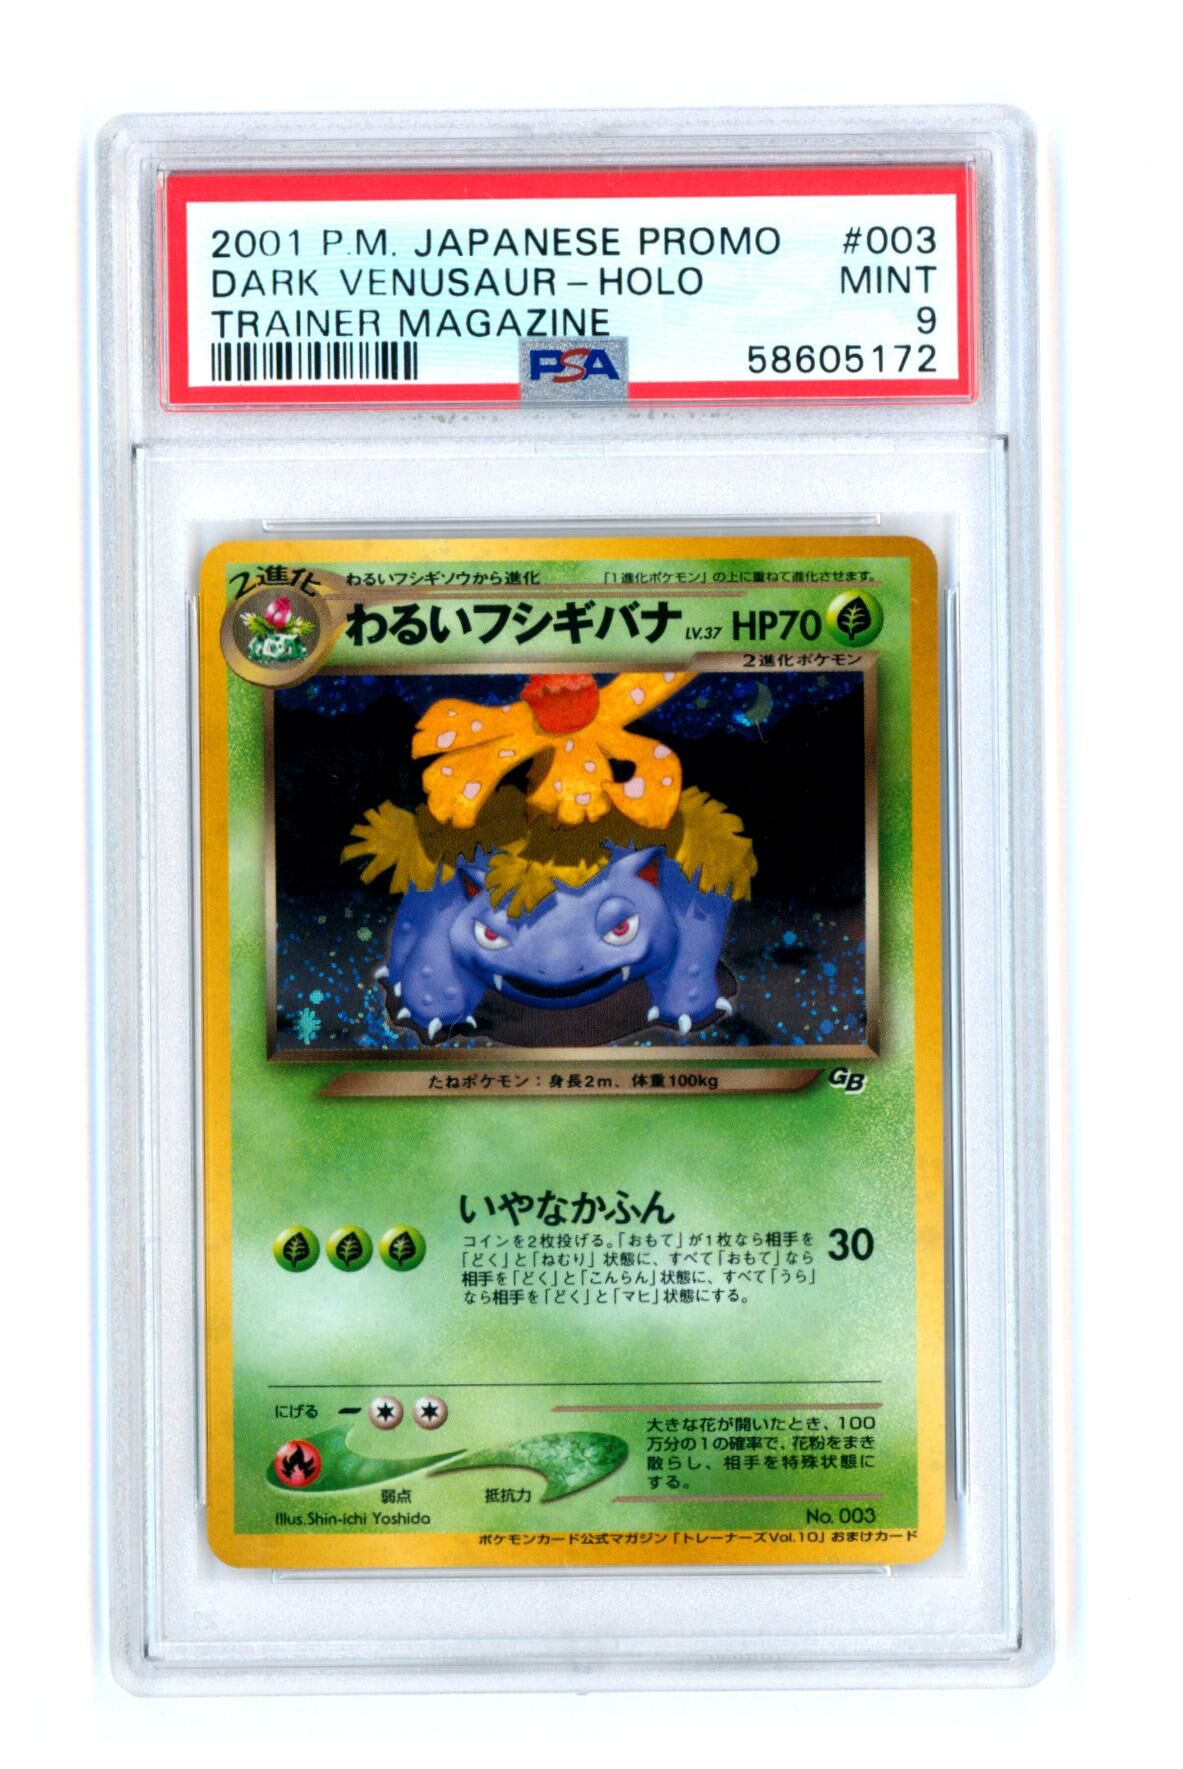 Dark Venusaur #003 - Trainer Magazine - Japanese Promo - Holo - PSA 9 MINT - Pokémon